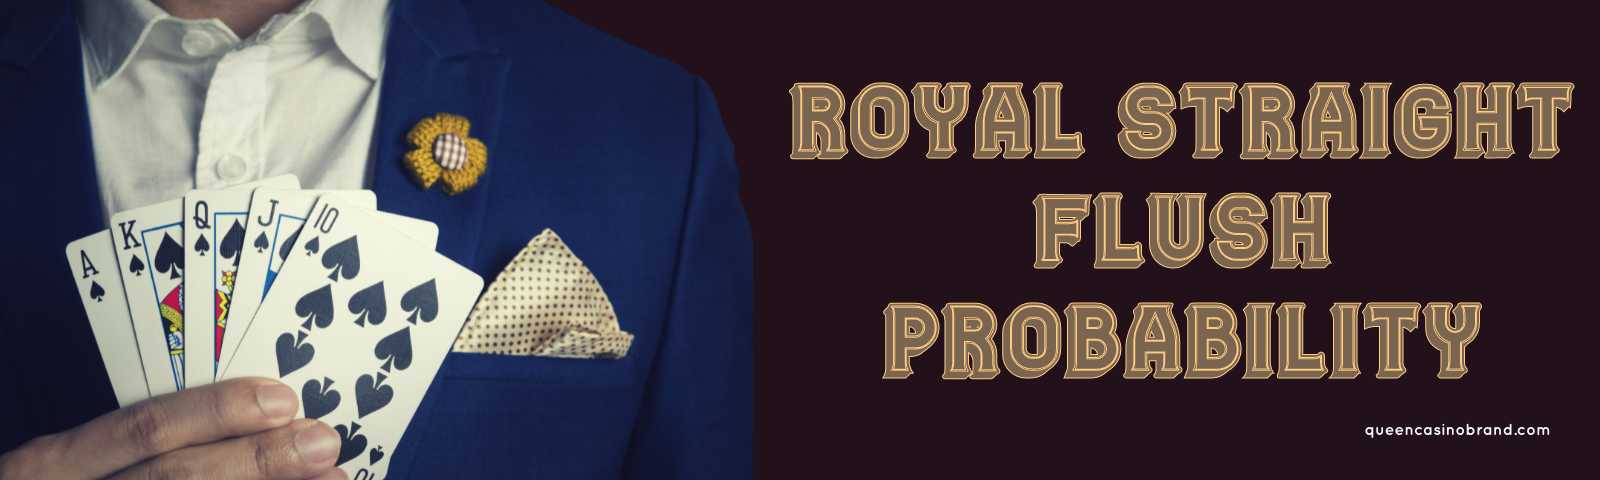 Royal Straight Flush Probability | Queen Casino Brand